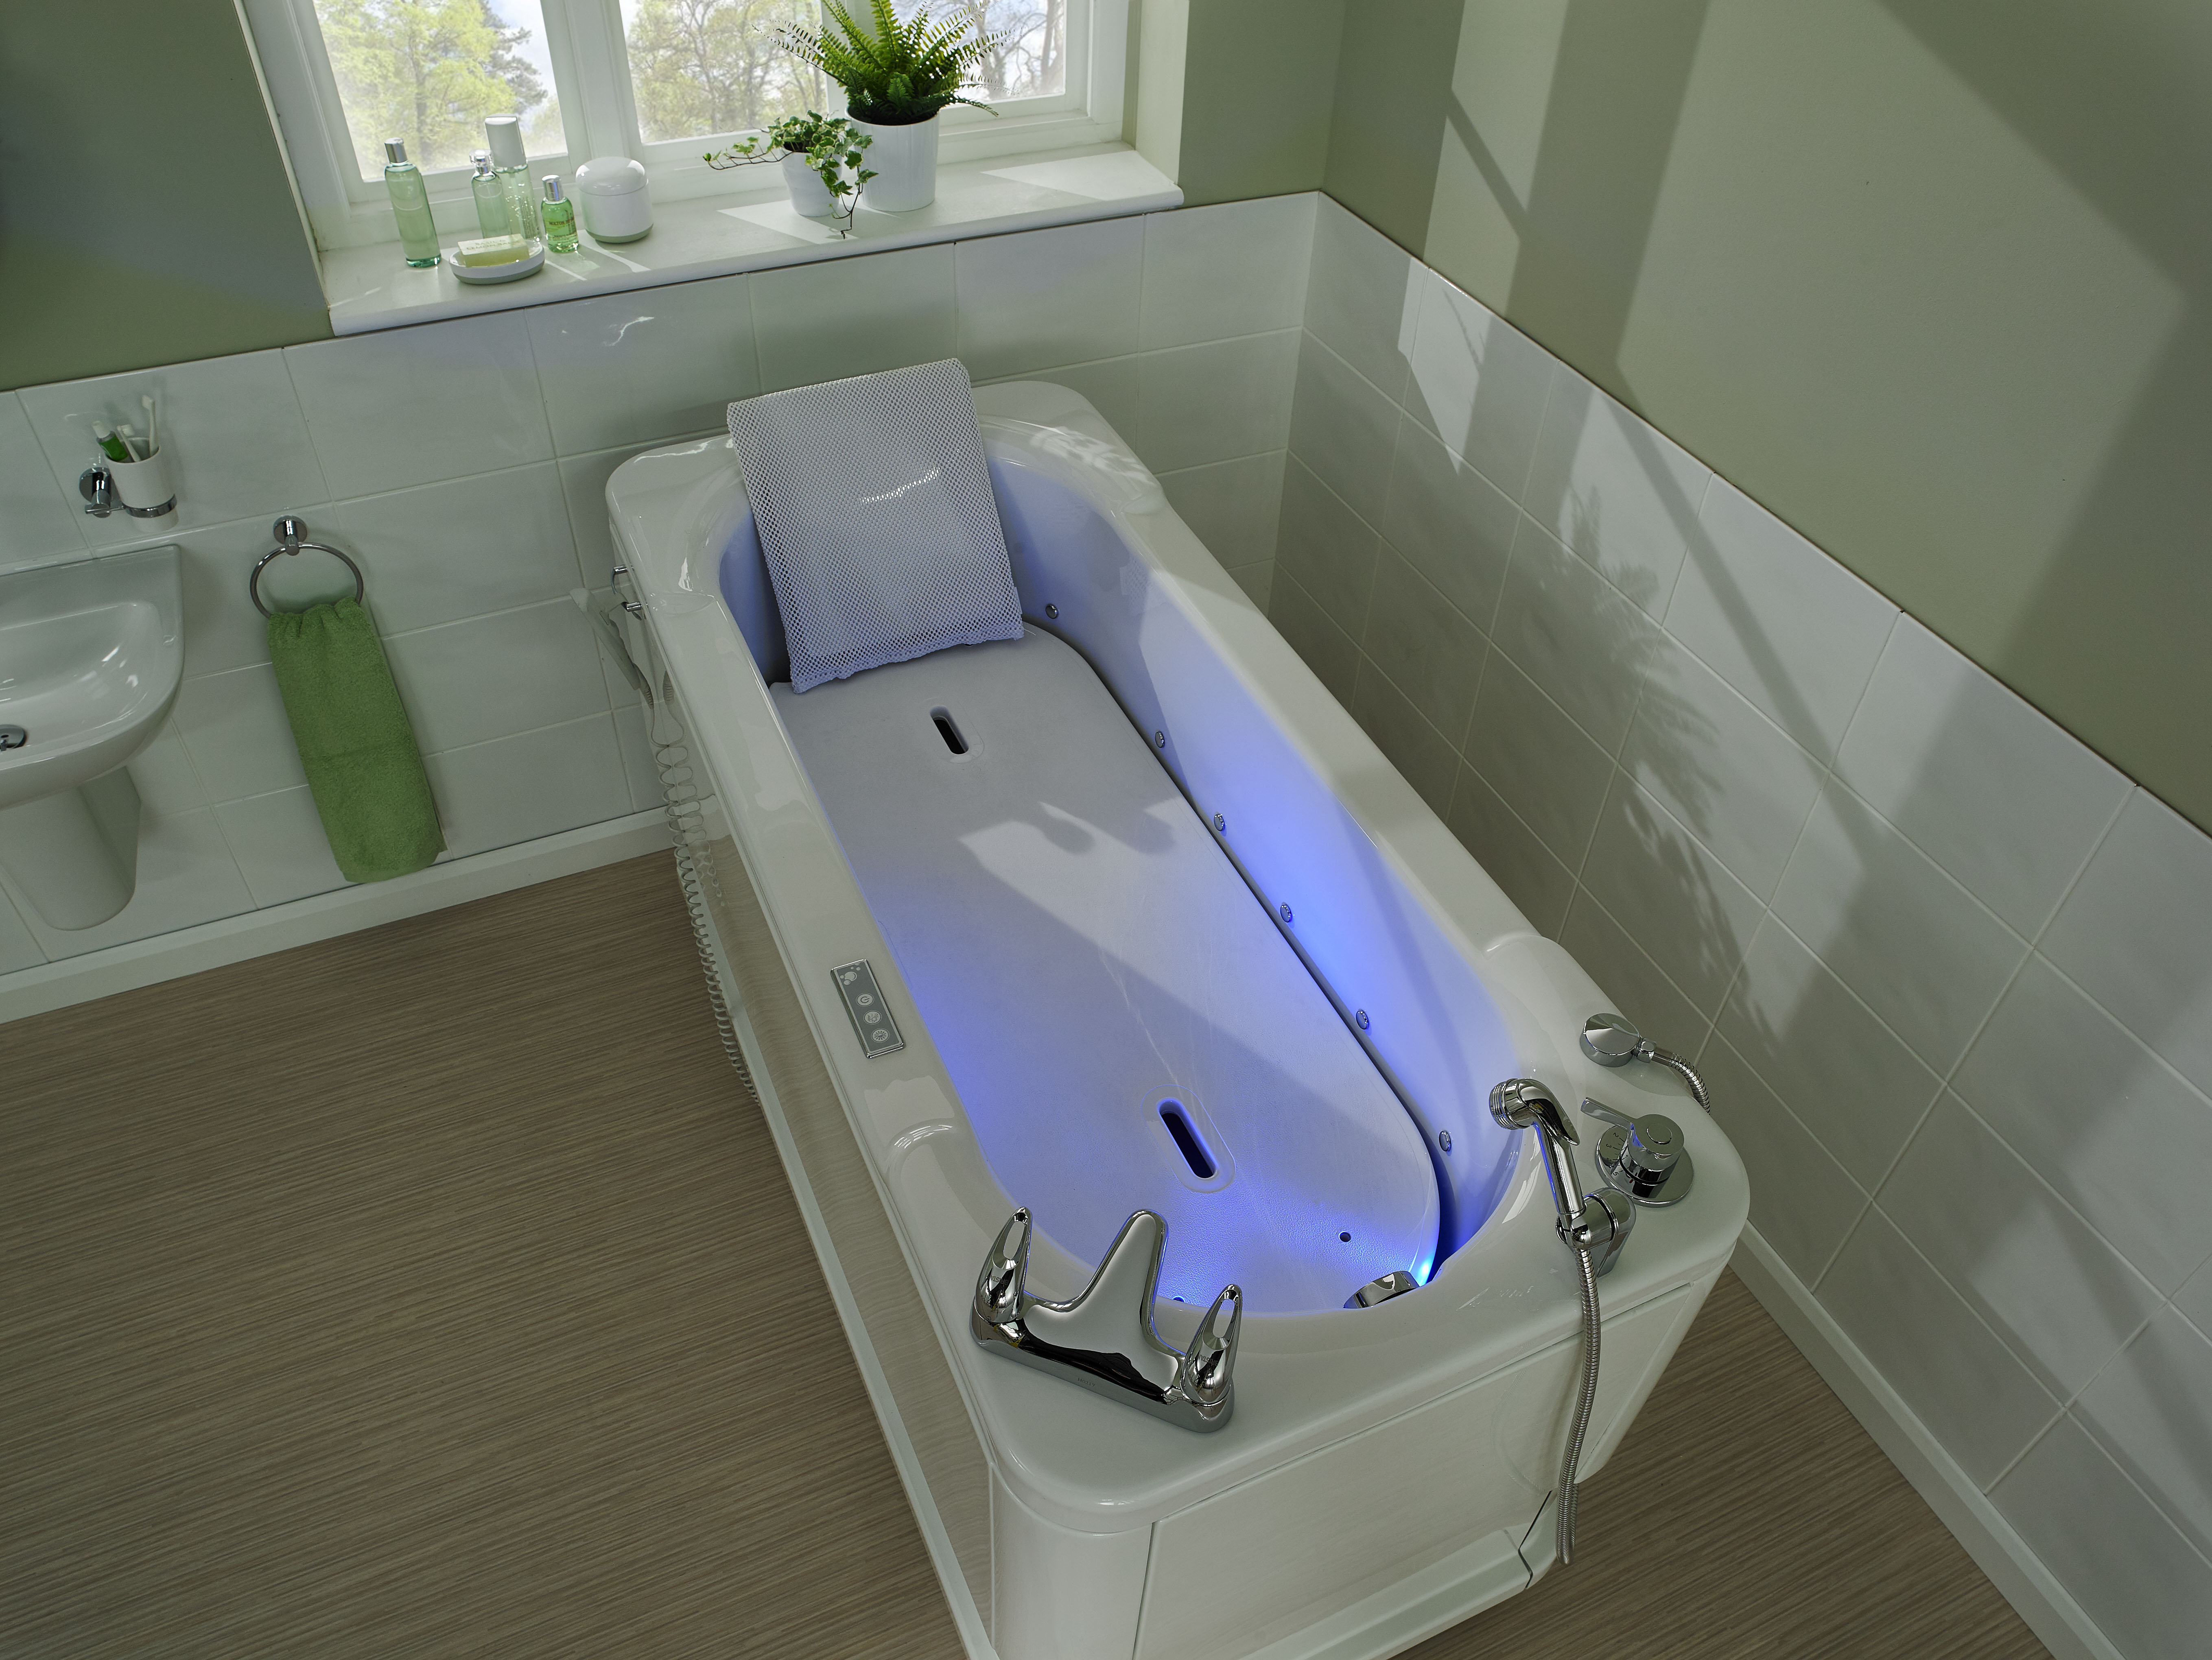 Gemini 1700 height adjustable bath with blue LED lights